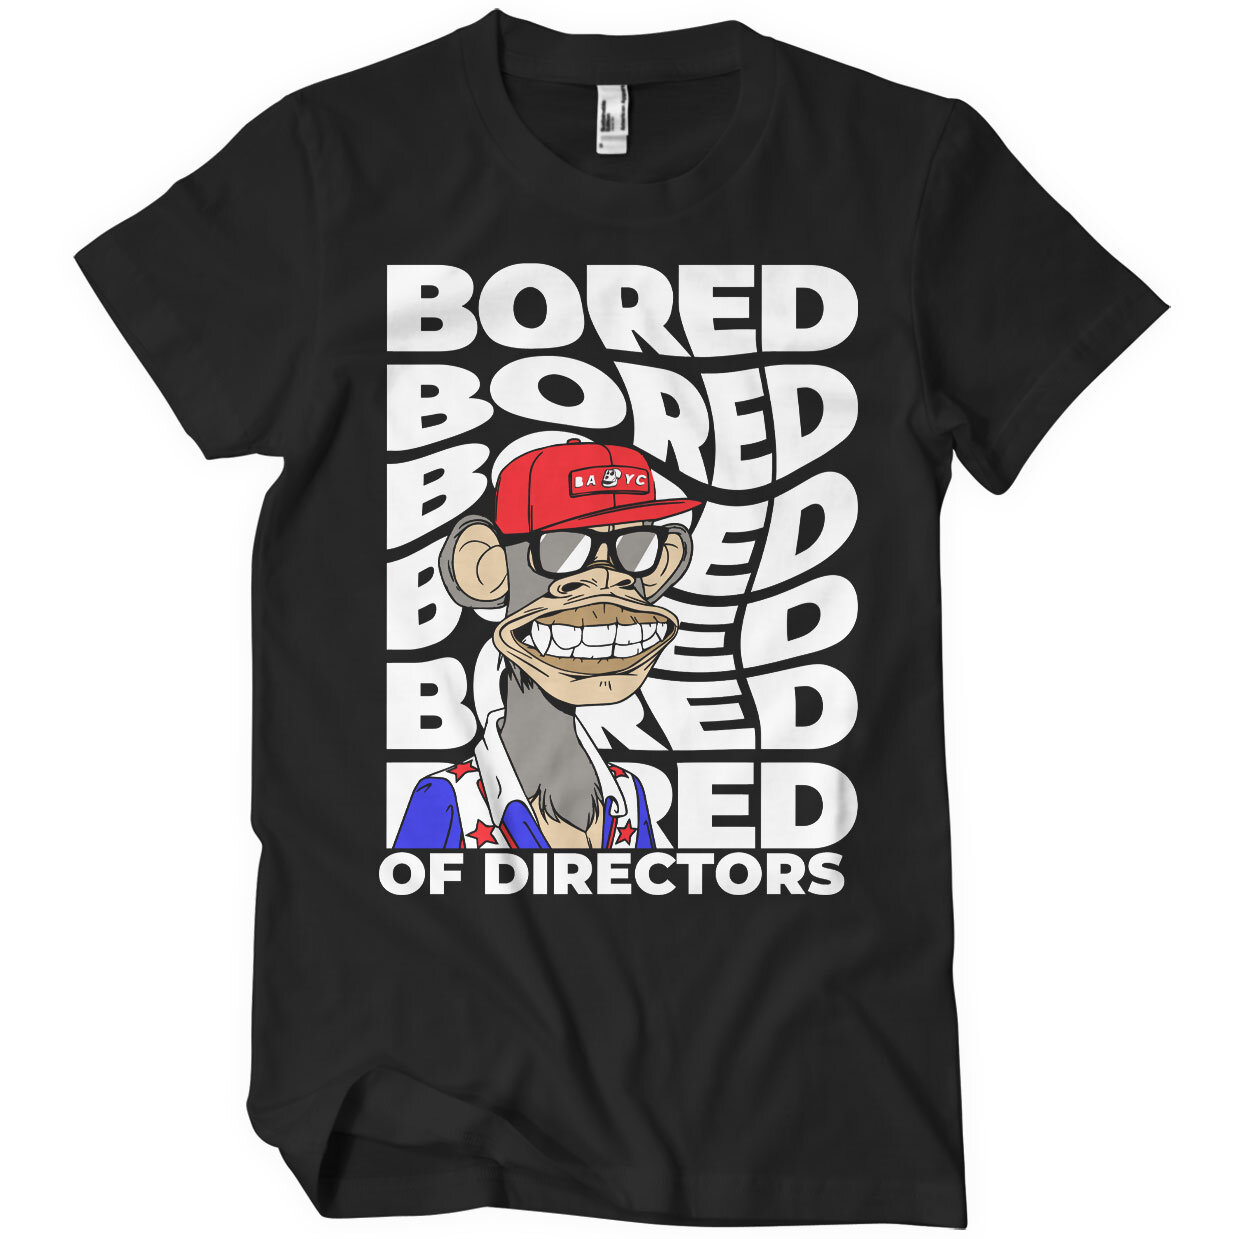 Bored T-Shirt